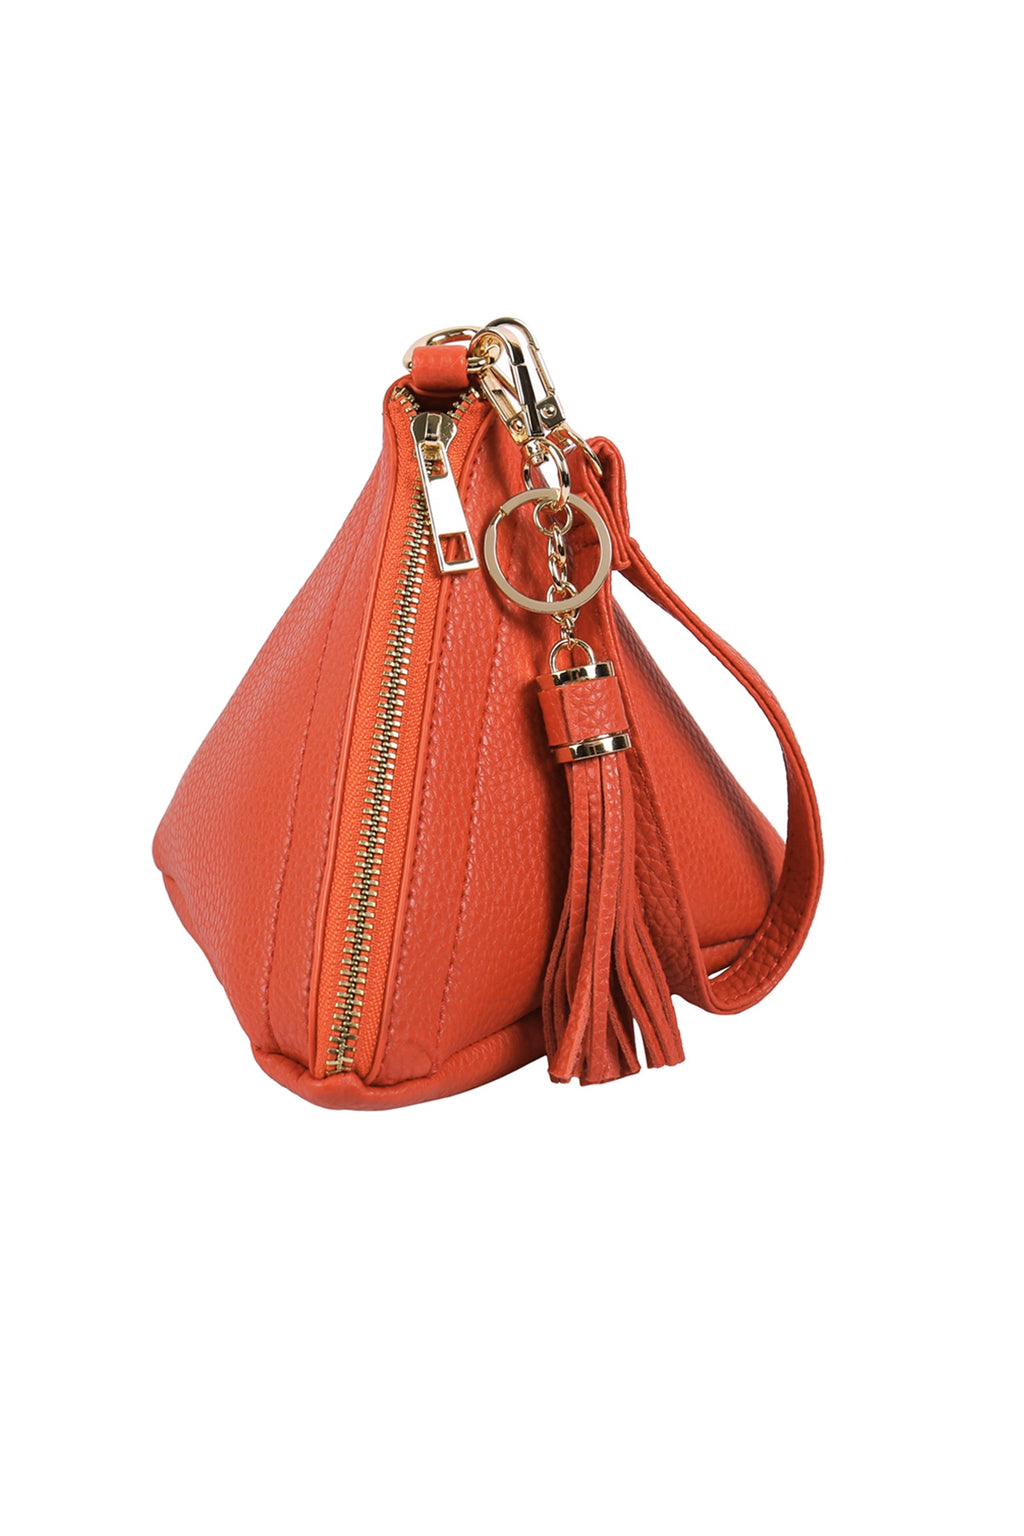 Pyramid Shape Leather Wristlet Bag Orange - Pack of 6